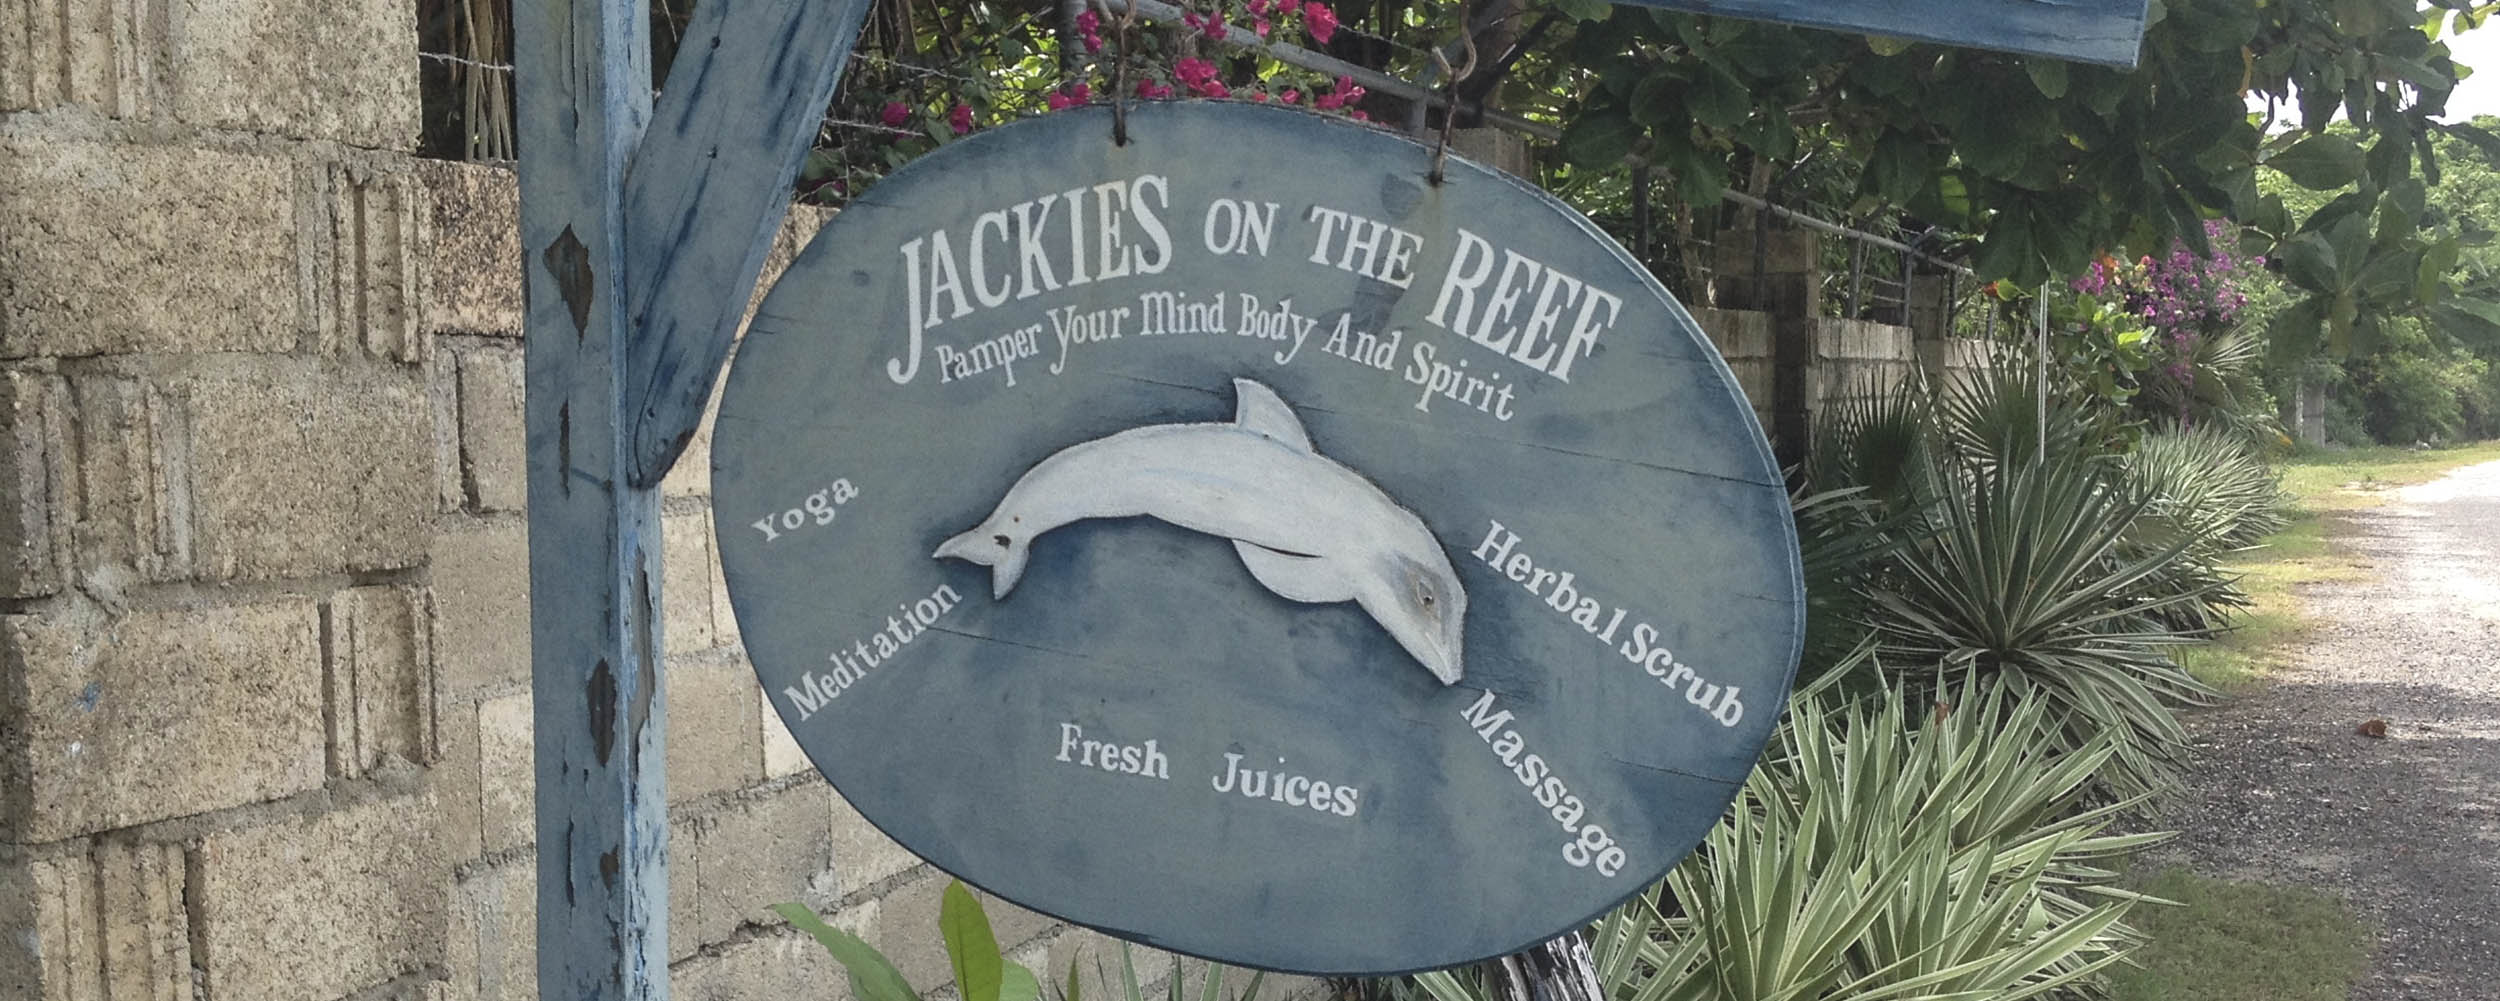 Jackies_On_The_Reef - Negril Jamaica